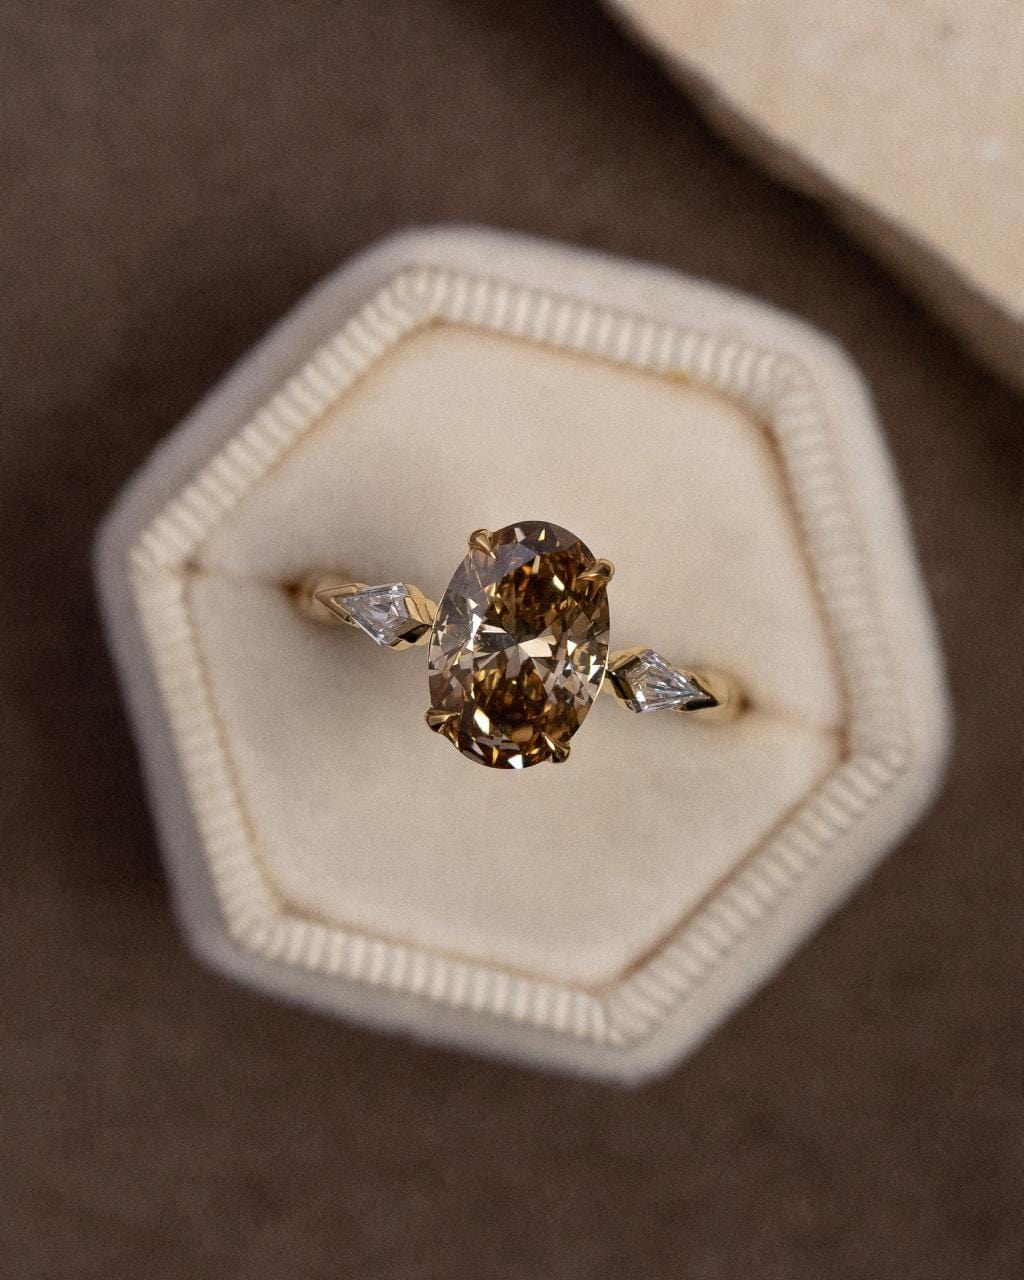 Hogans Family Jewellers 18K YG Champagne Diamond Ring